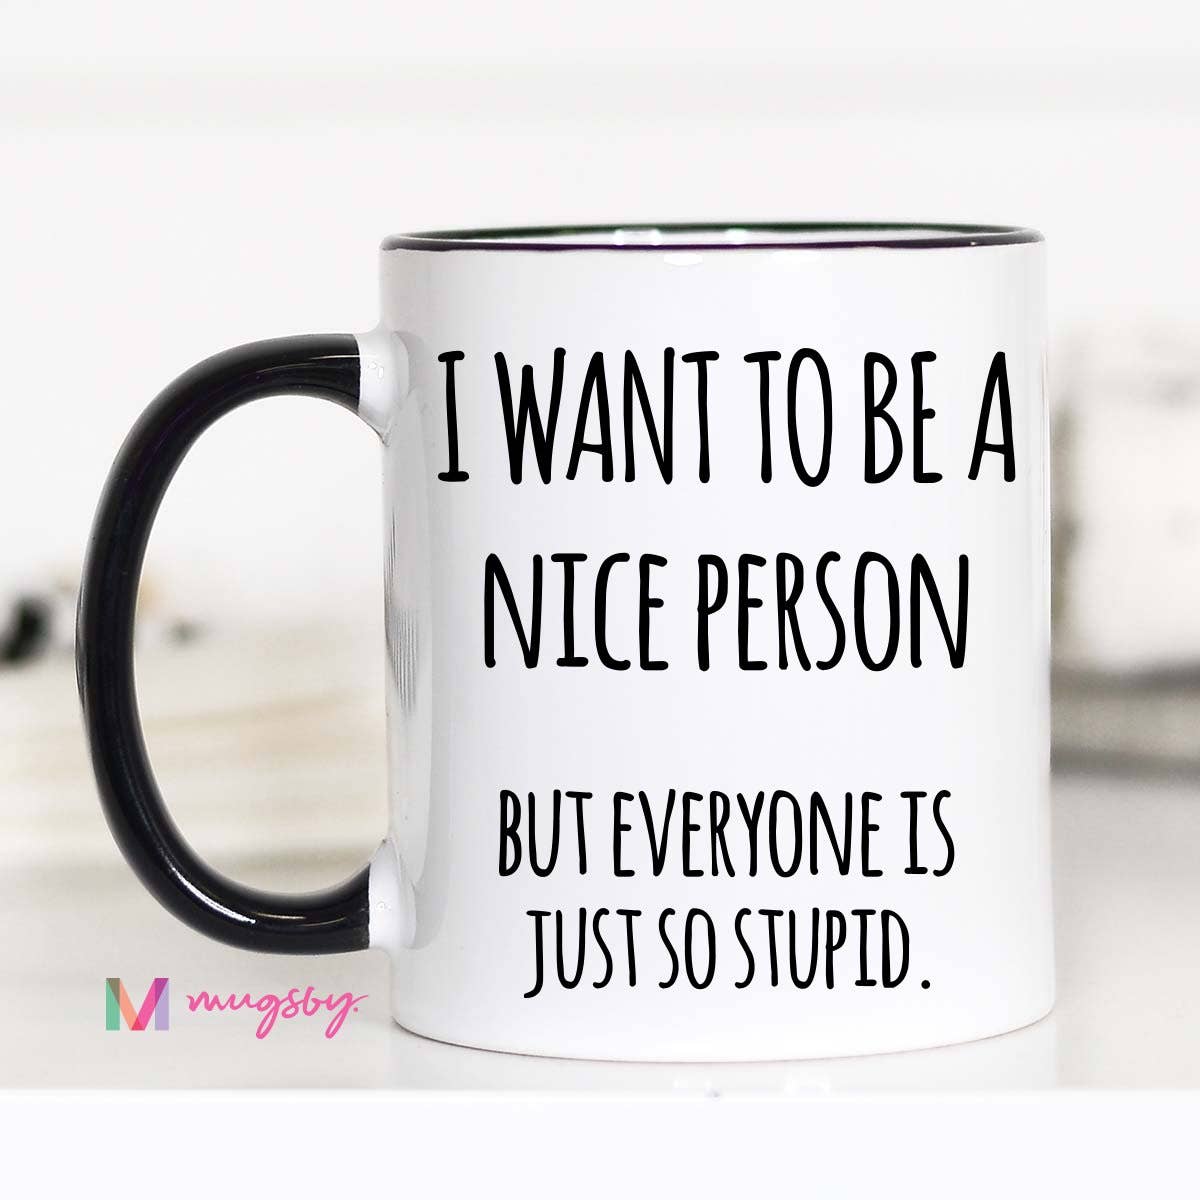 Mugsby - I Want To Be A Nice Person Mug